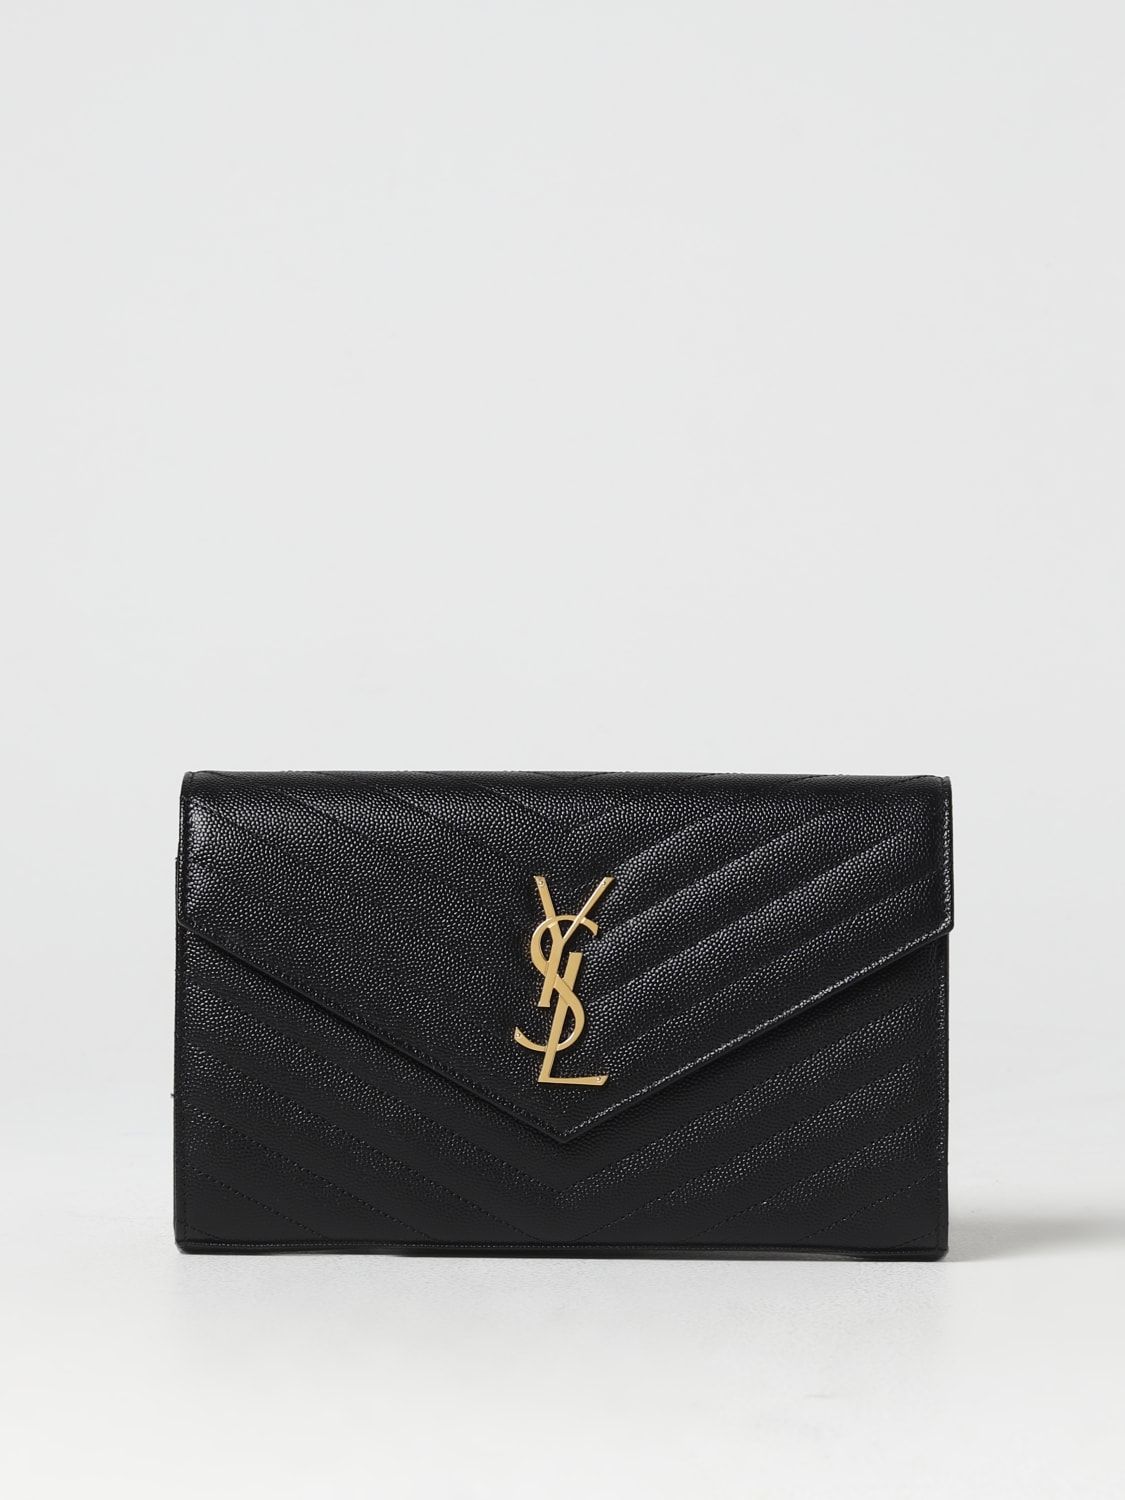 SAINT LAURENT: Cassandre wallet bag in quilted embossed leather - Black | Saint Laurent mini bag ... | Giglio.com - Global Italian fashion boutique